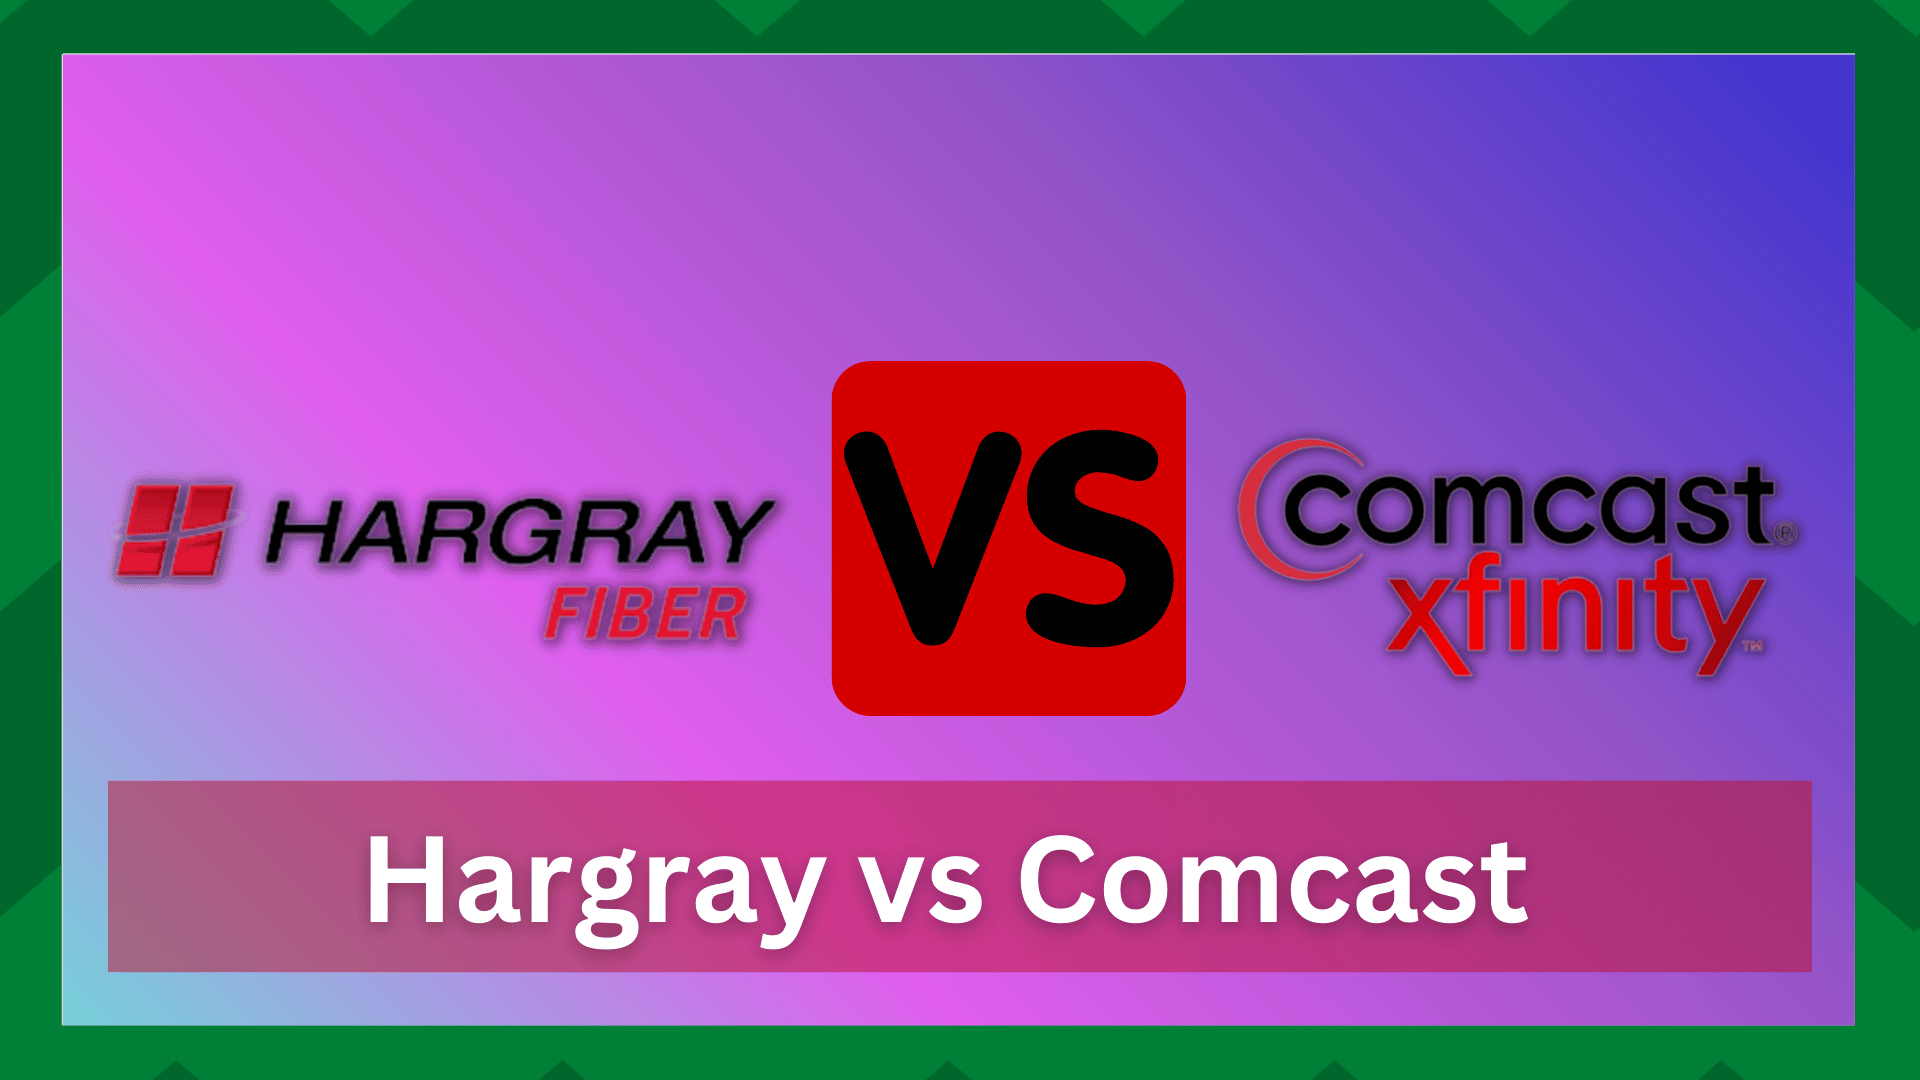 Hargray vs Comcast